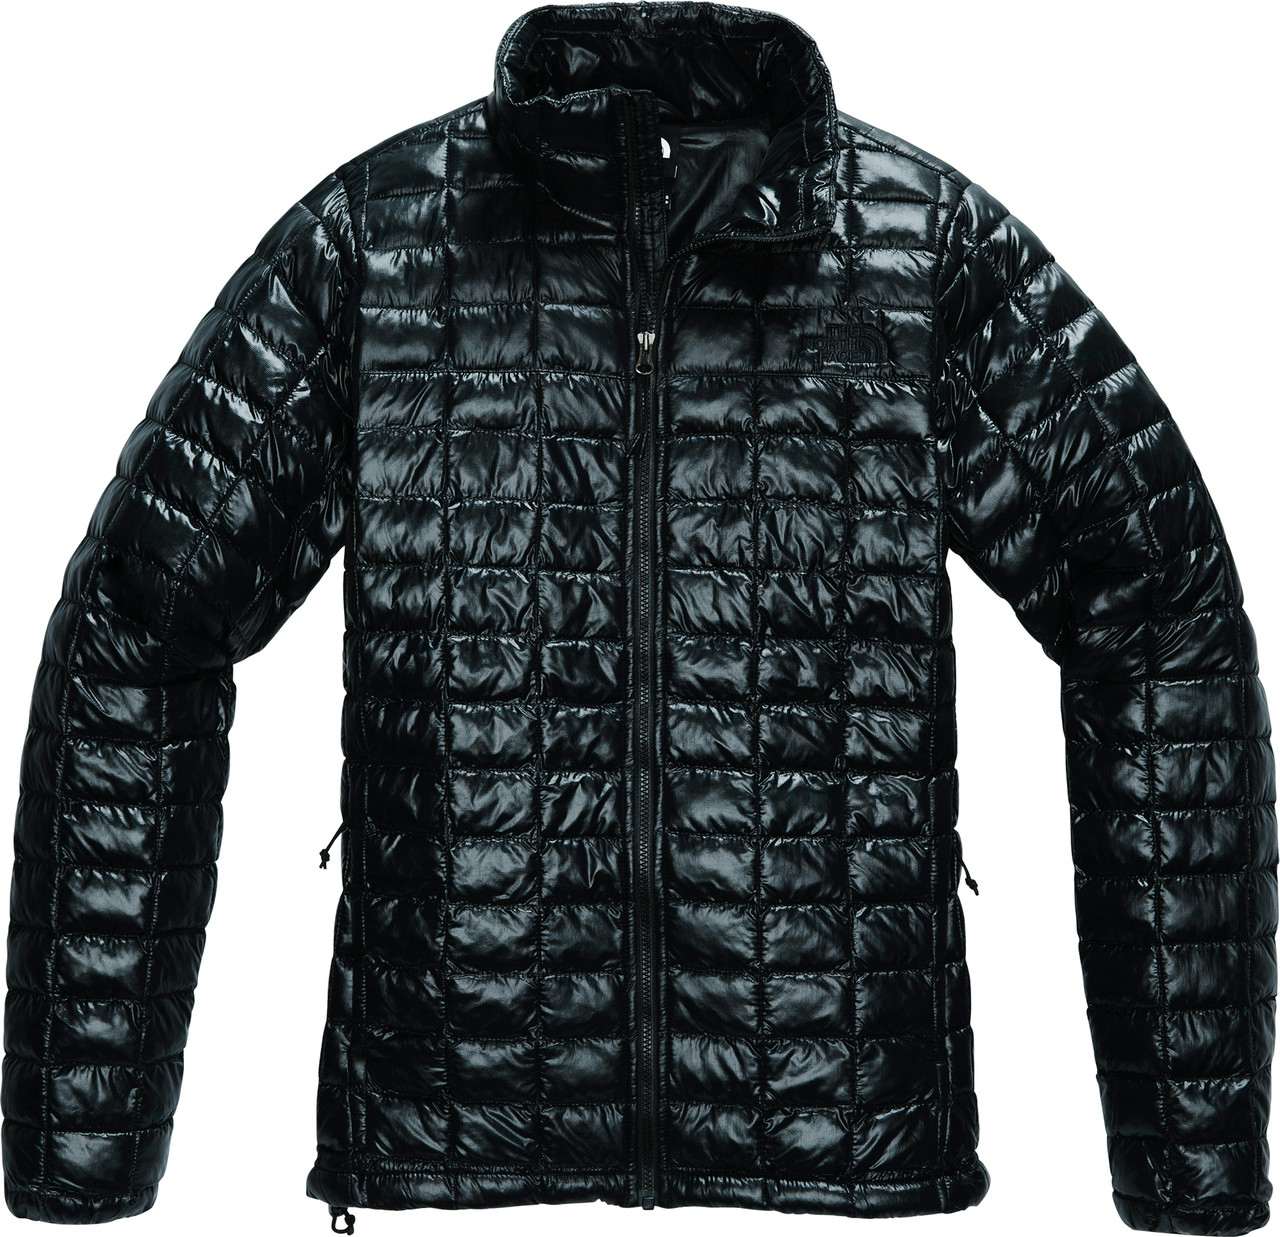 Thermoball Eco Jacket TNF Black